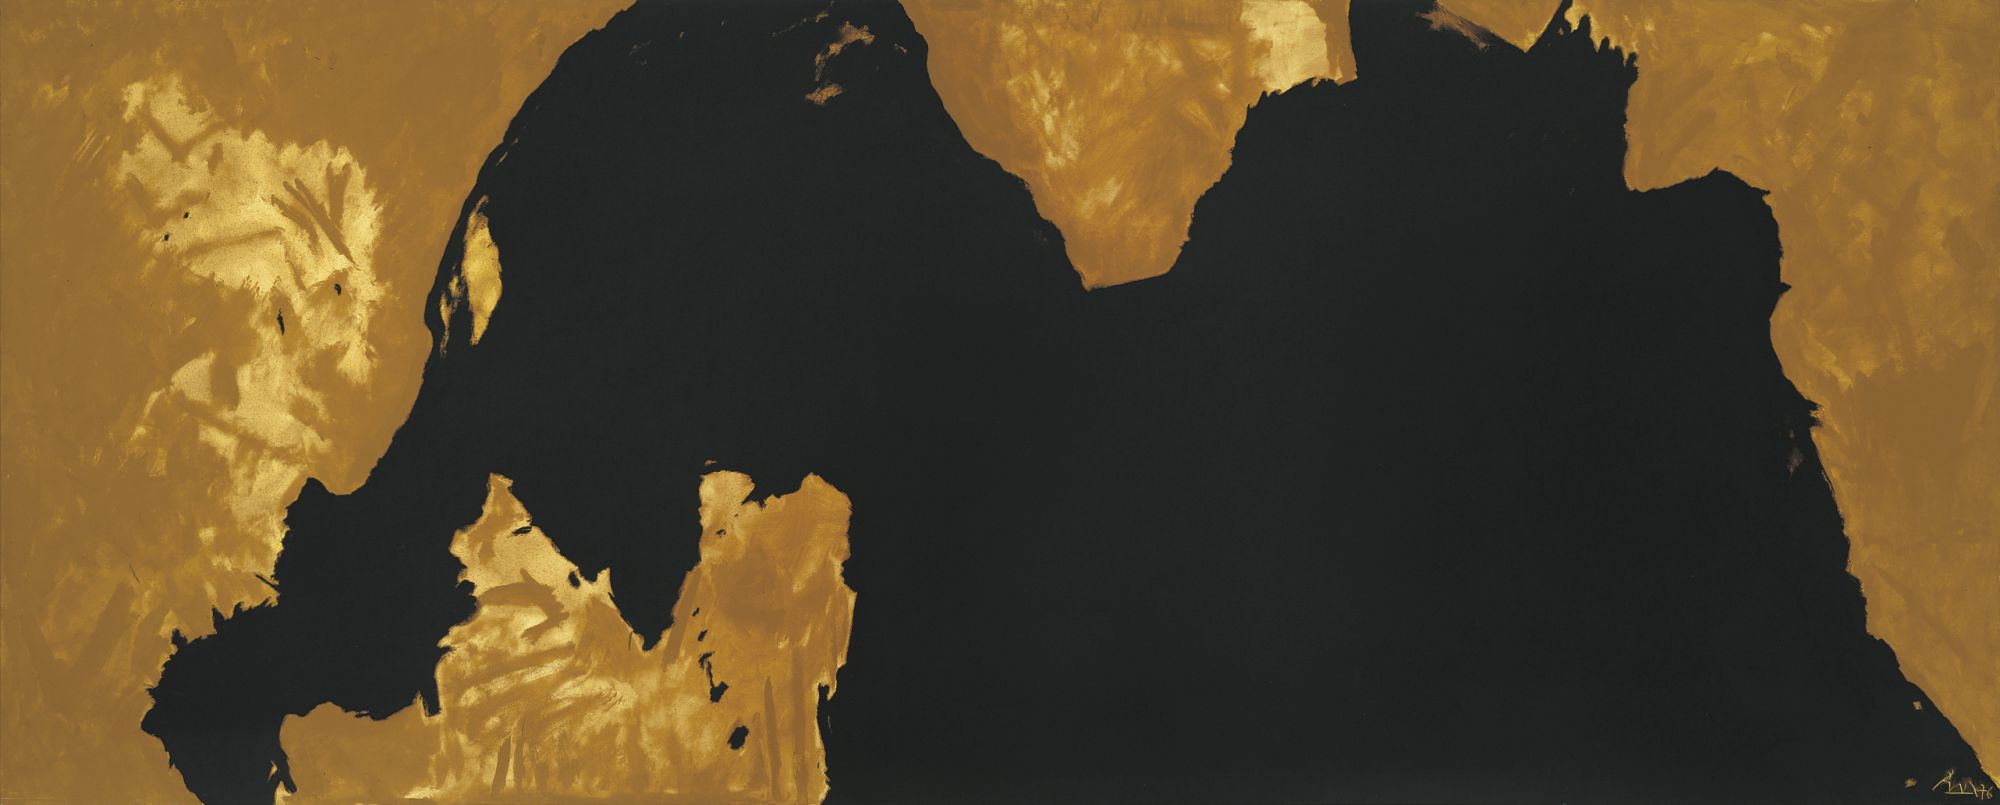 Threatening Presence, 1976, acrylic on canvas, 72 ✕ 180 in. (182.9 ✕ 457.2 cm)